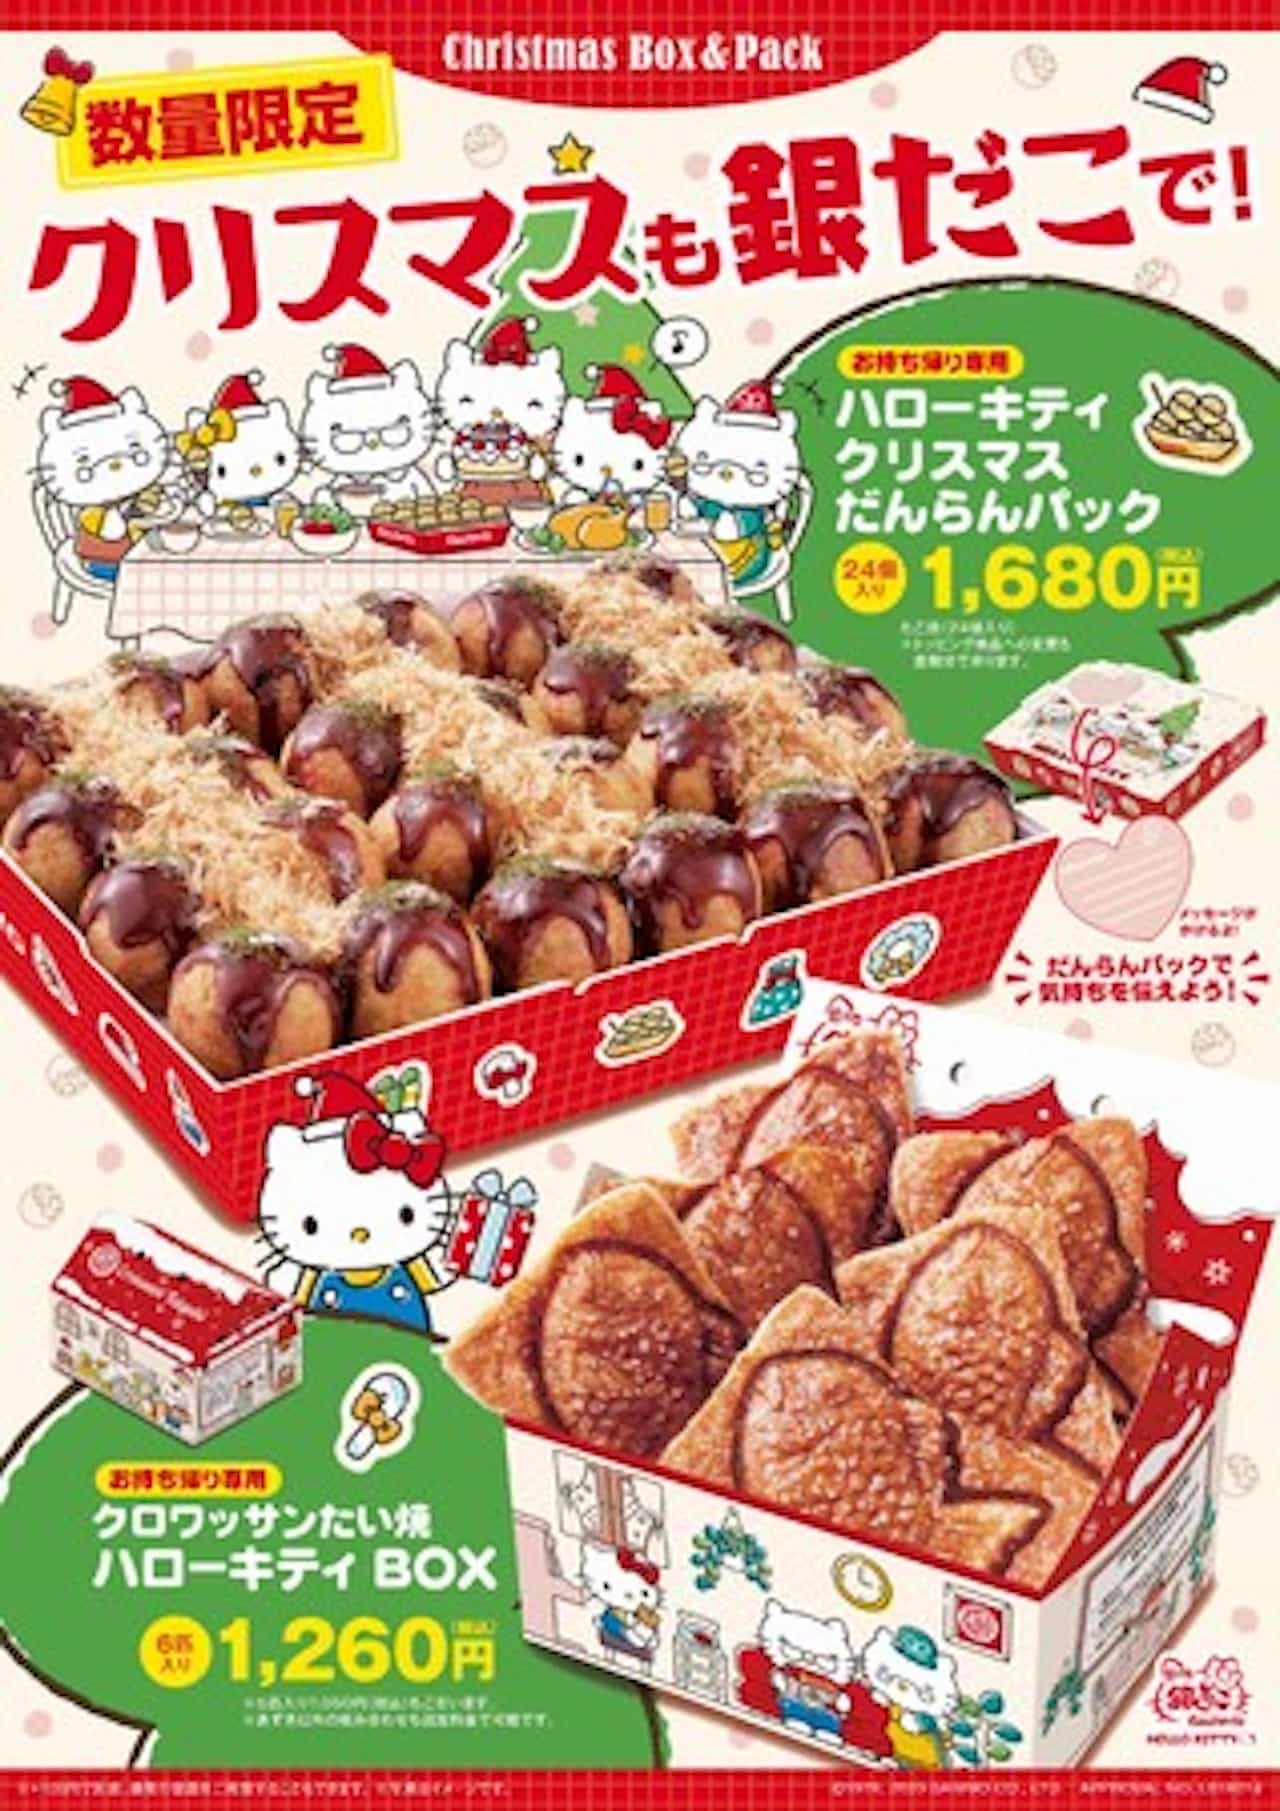 Limited quantity "Hello Kitty Christmas Danran Pack" and "Croissant Taiyaki Hello Kitty BOX"